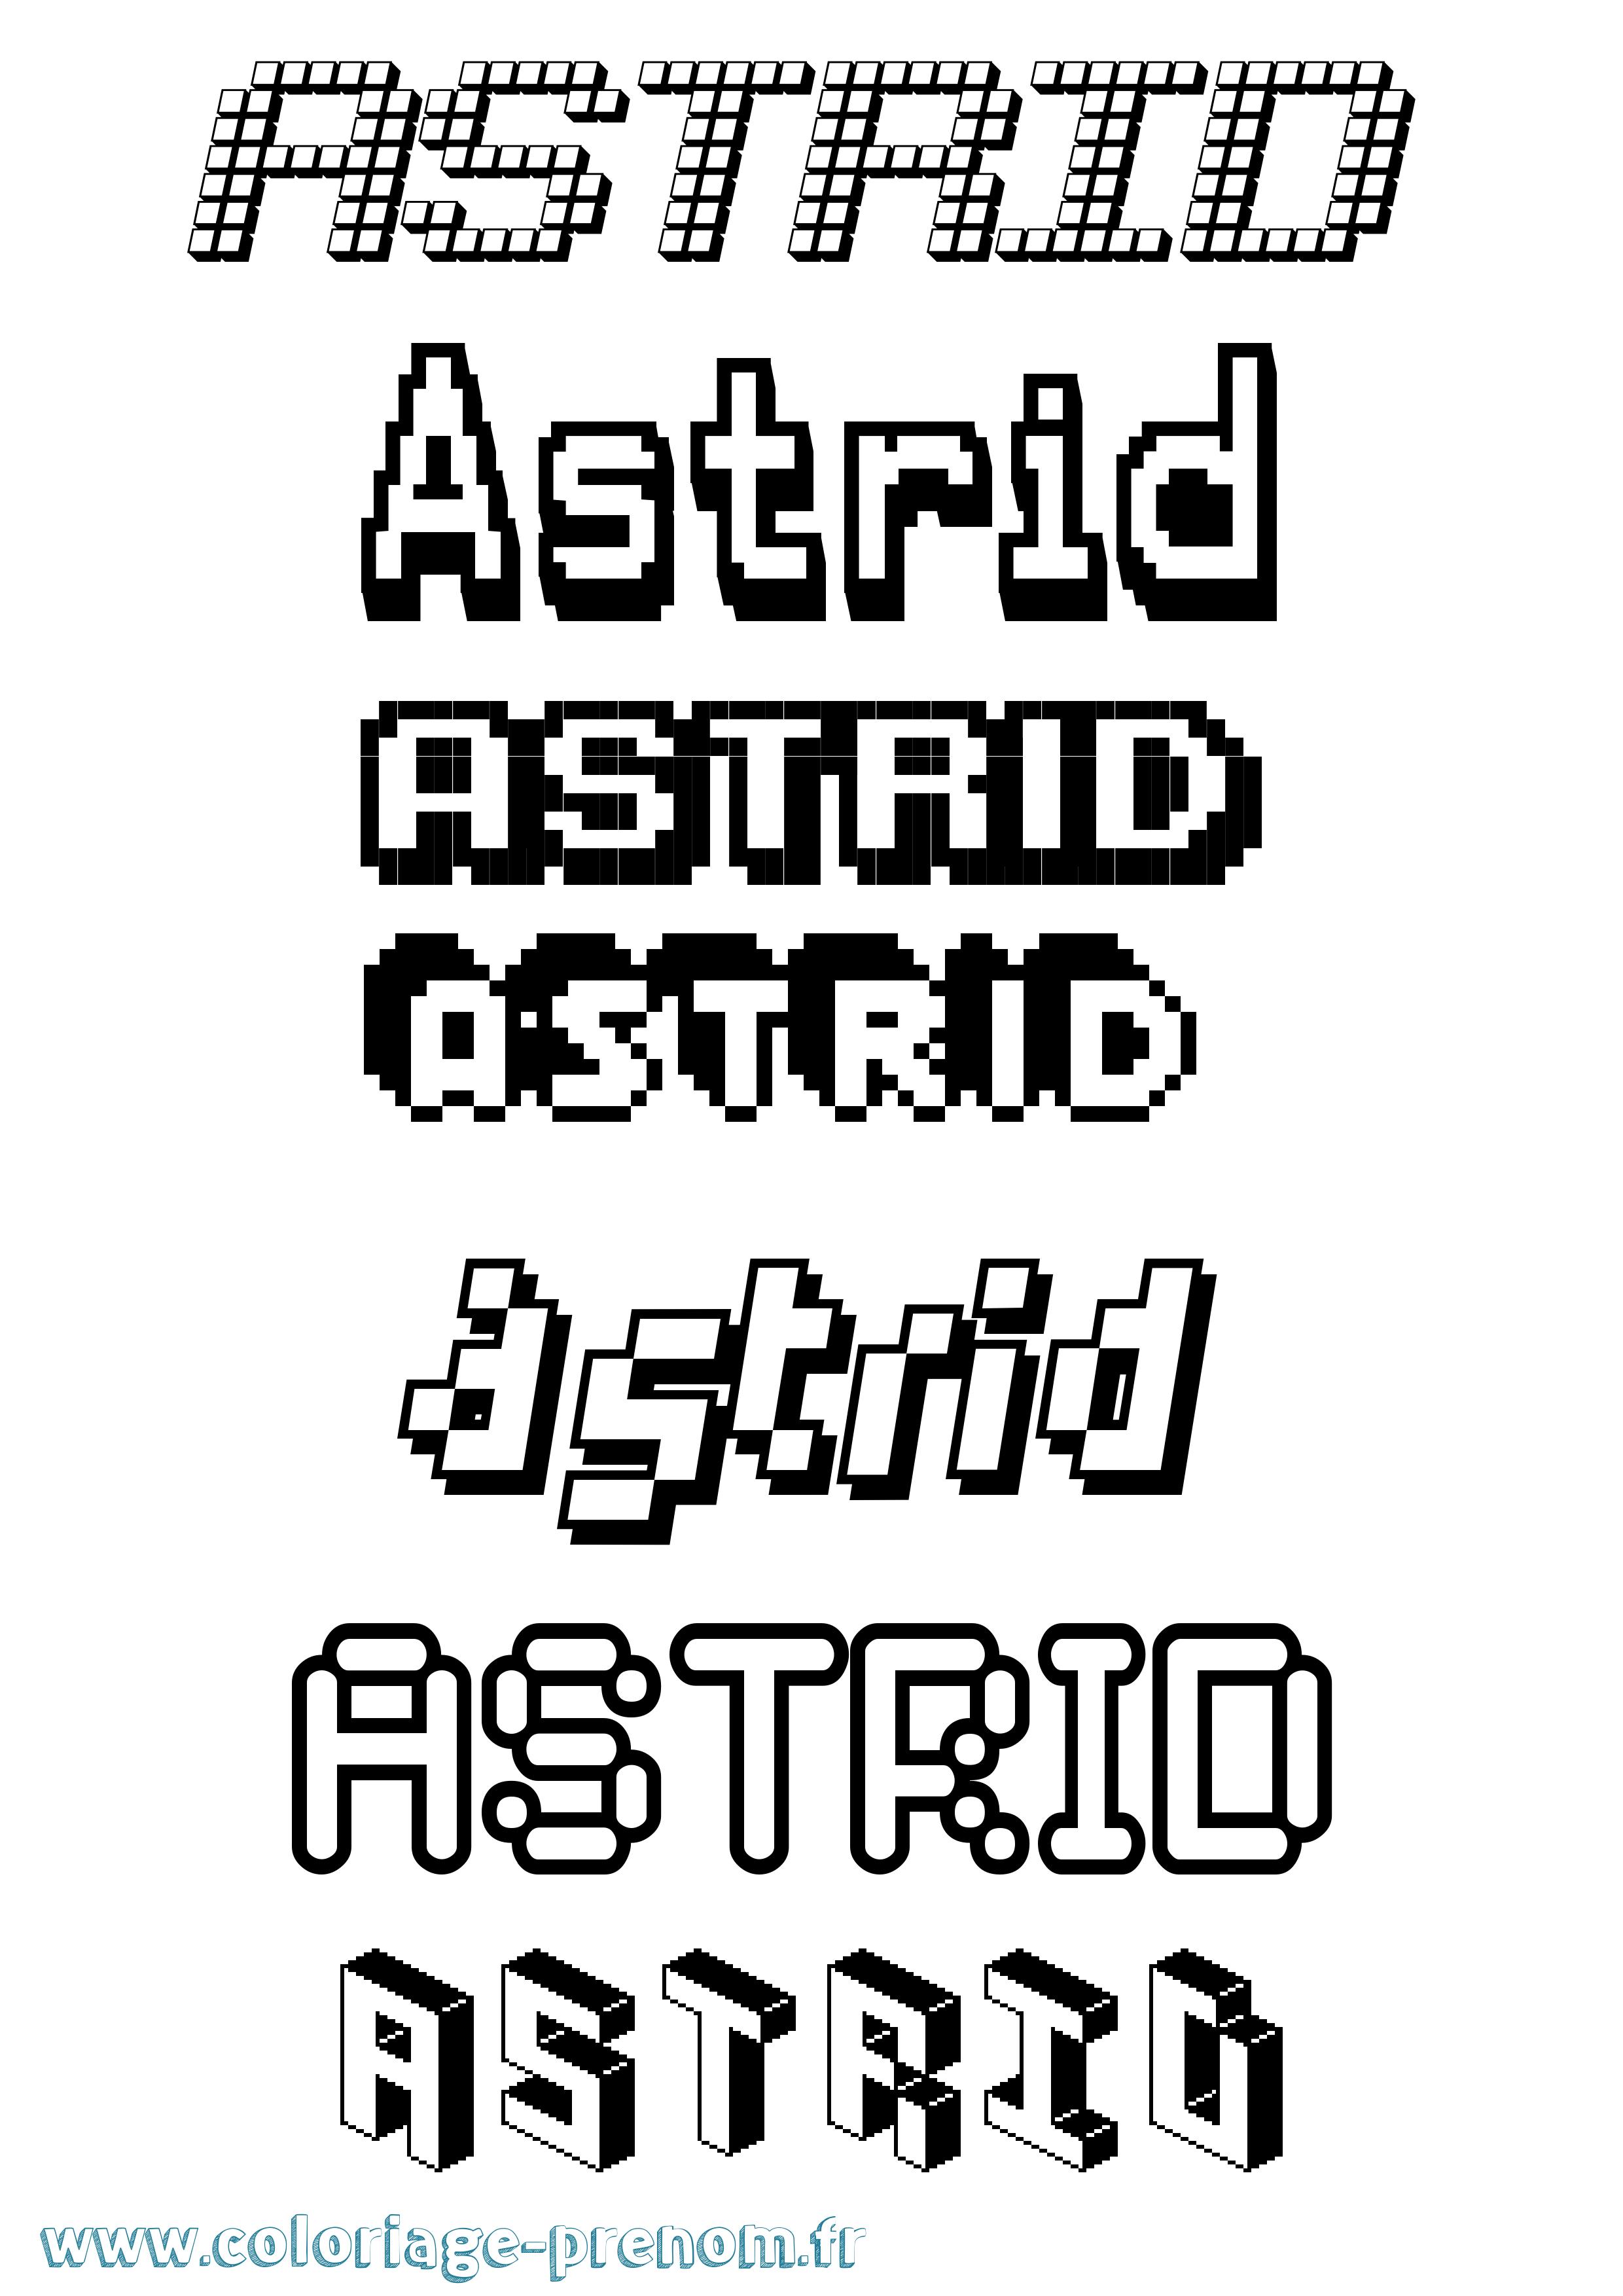 Coloriage prénom Astrid Pixel